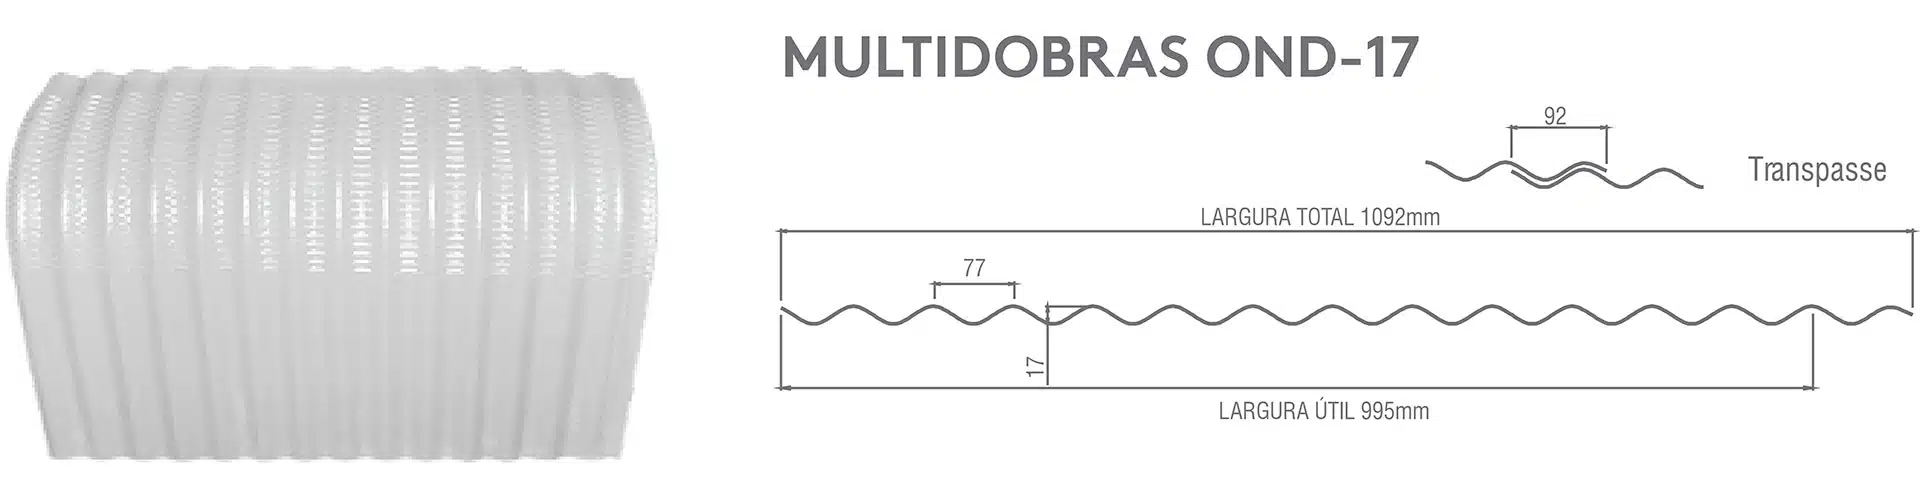 multidobras-ond-17